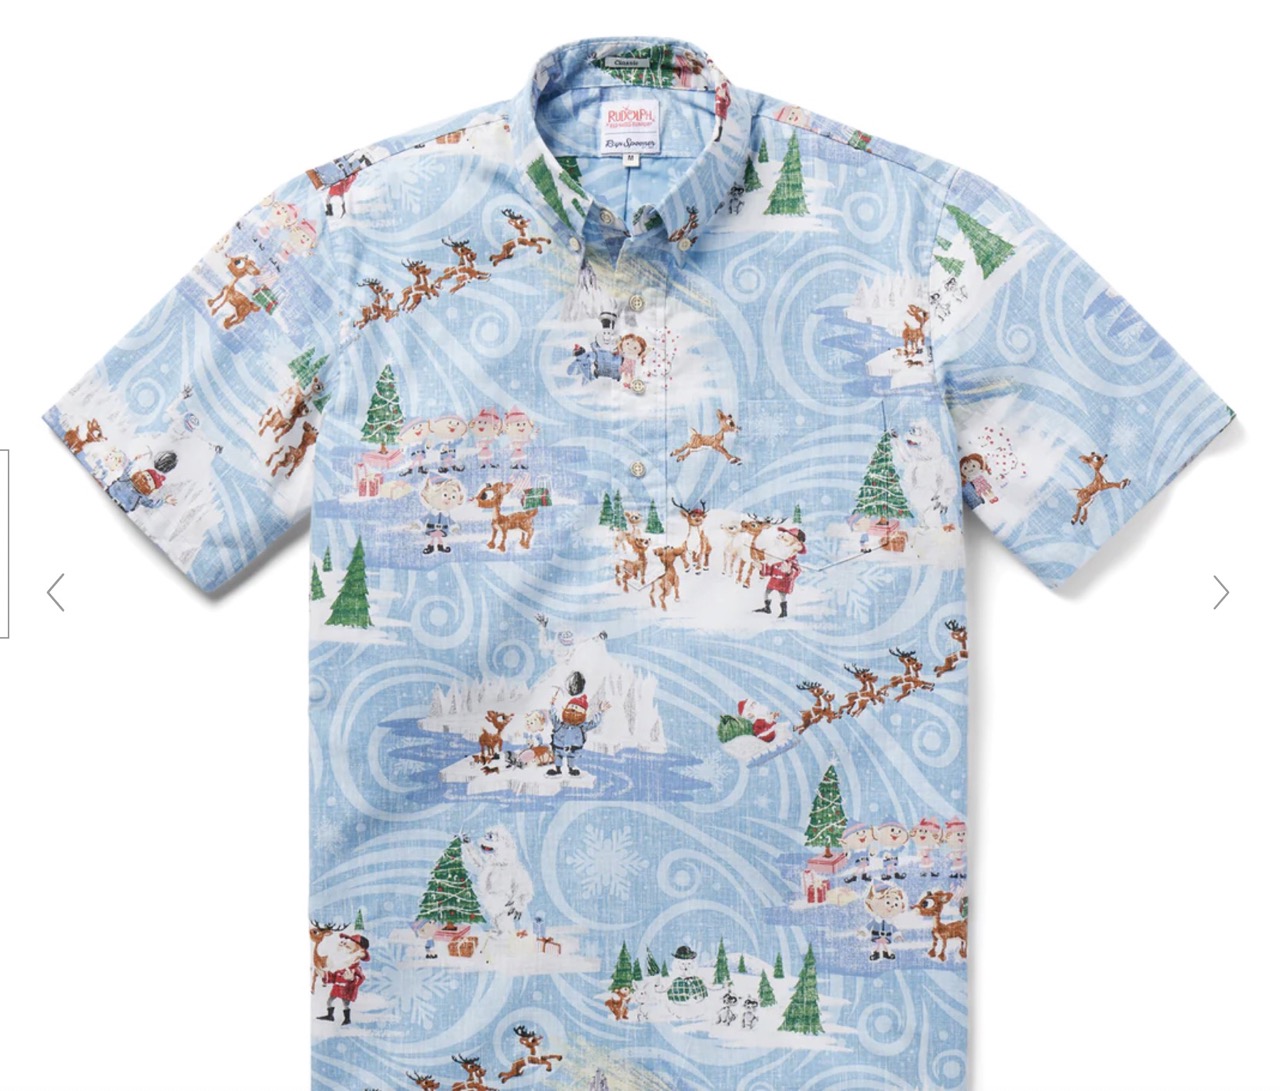 rudolph-aloha-shirt Large